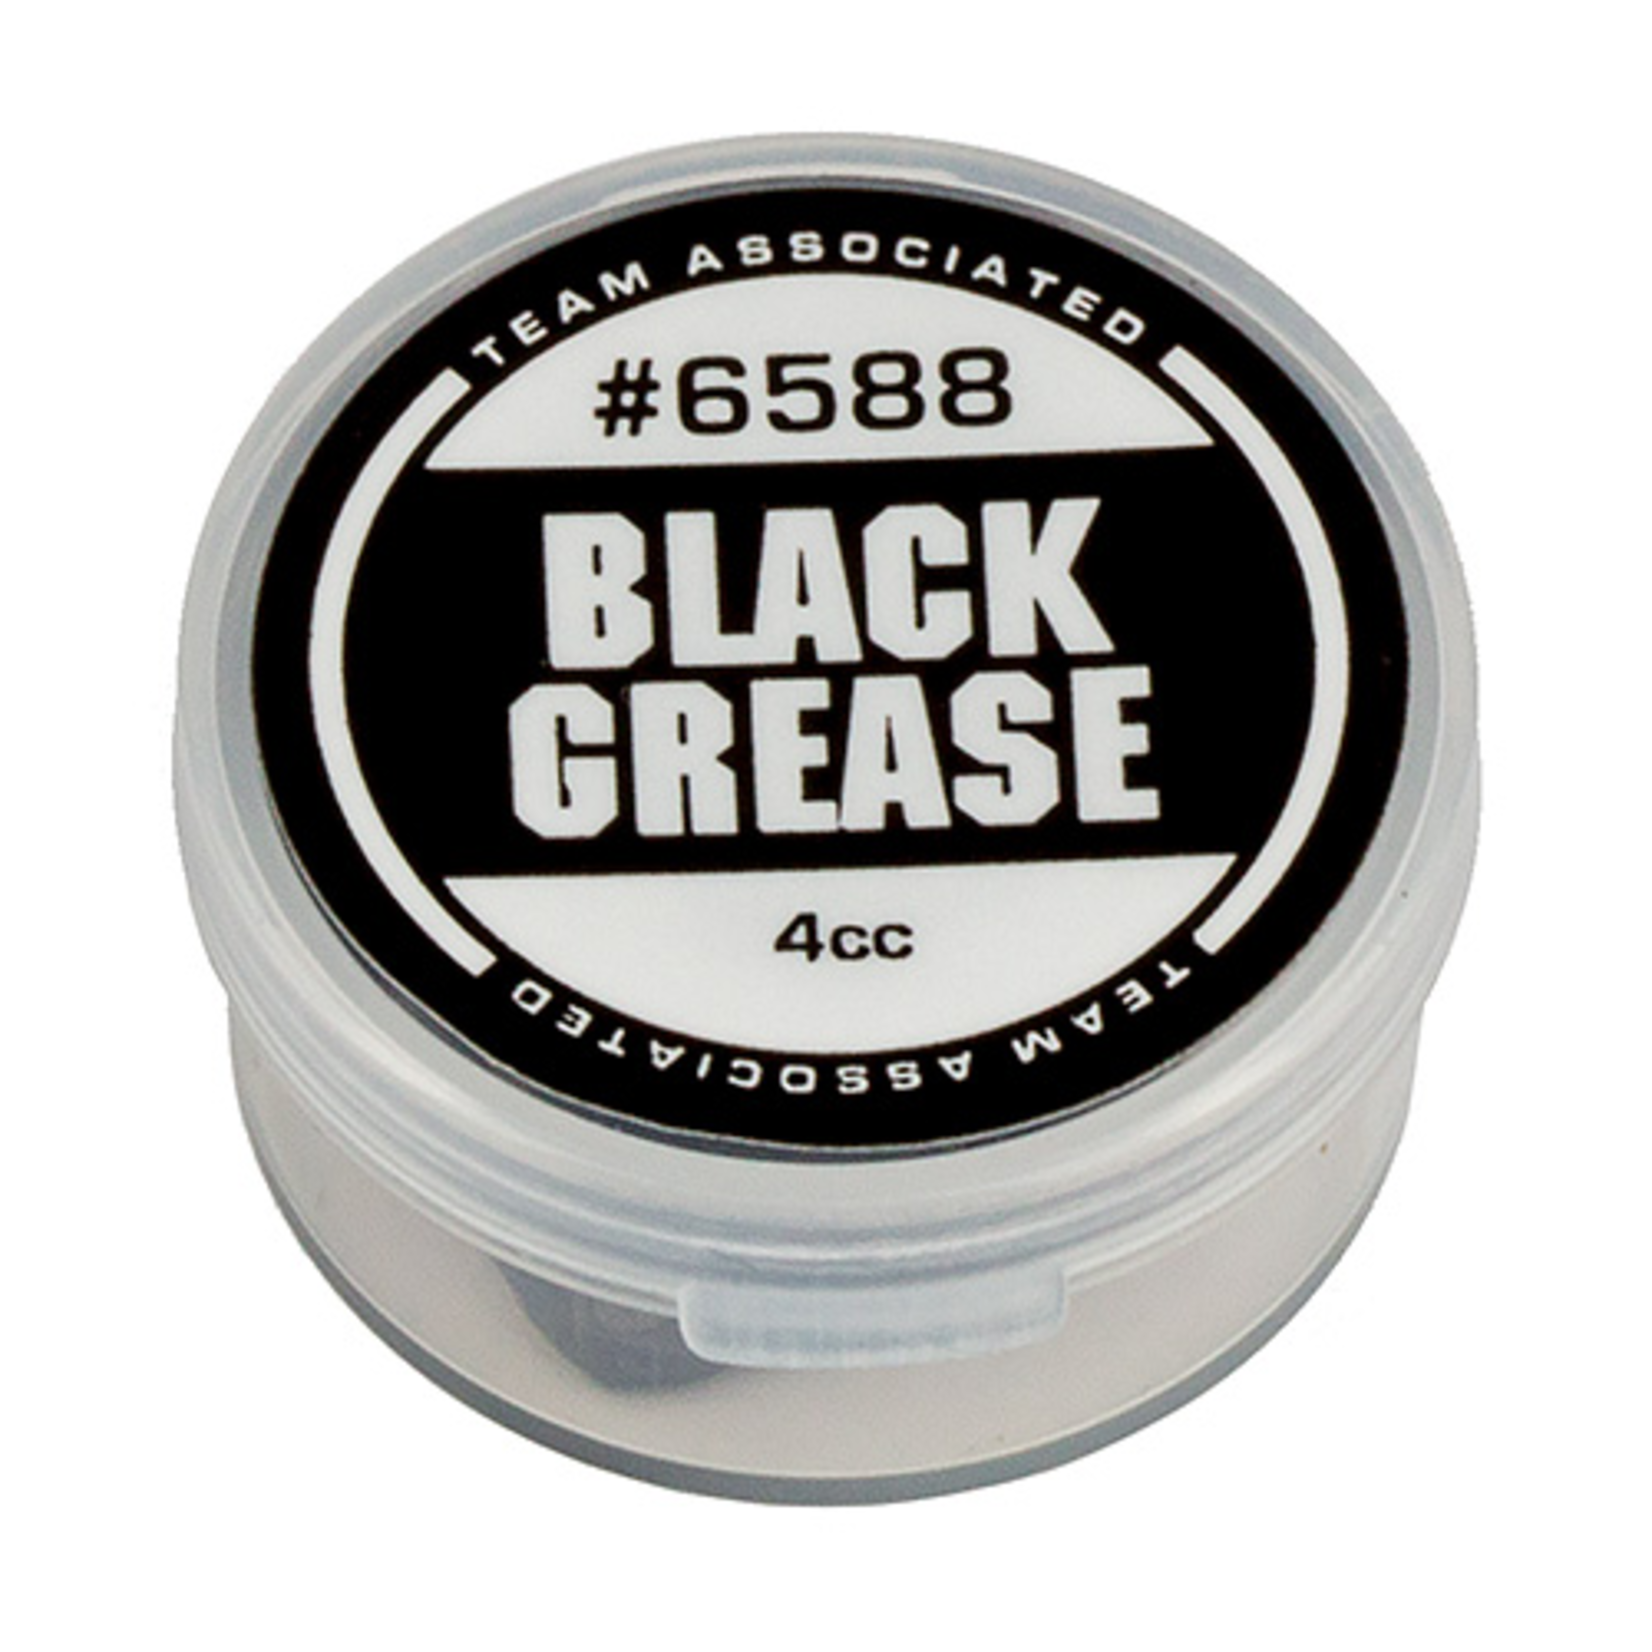 Black grease gta 5 фото 50